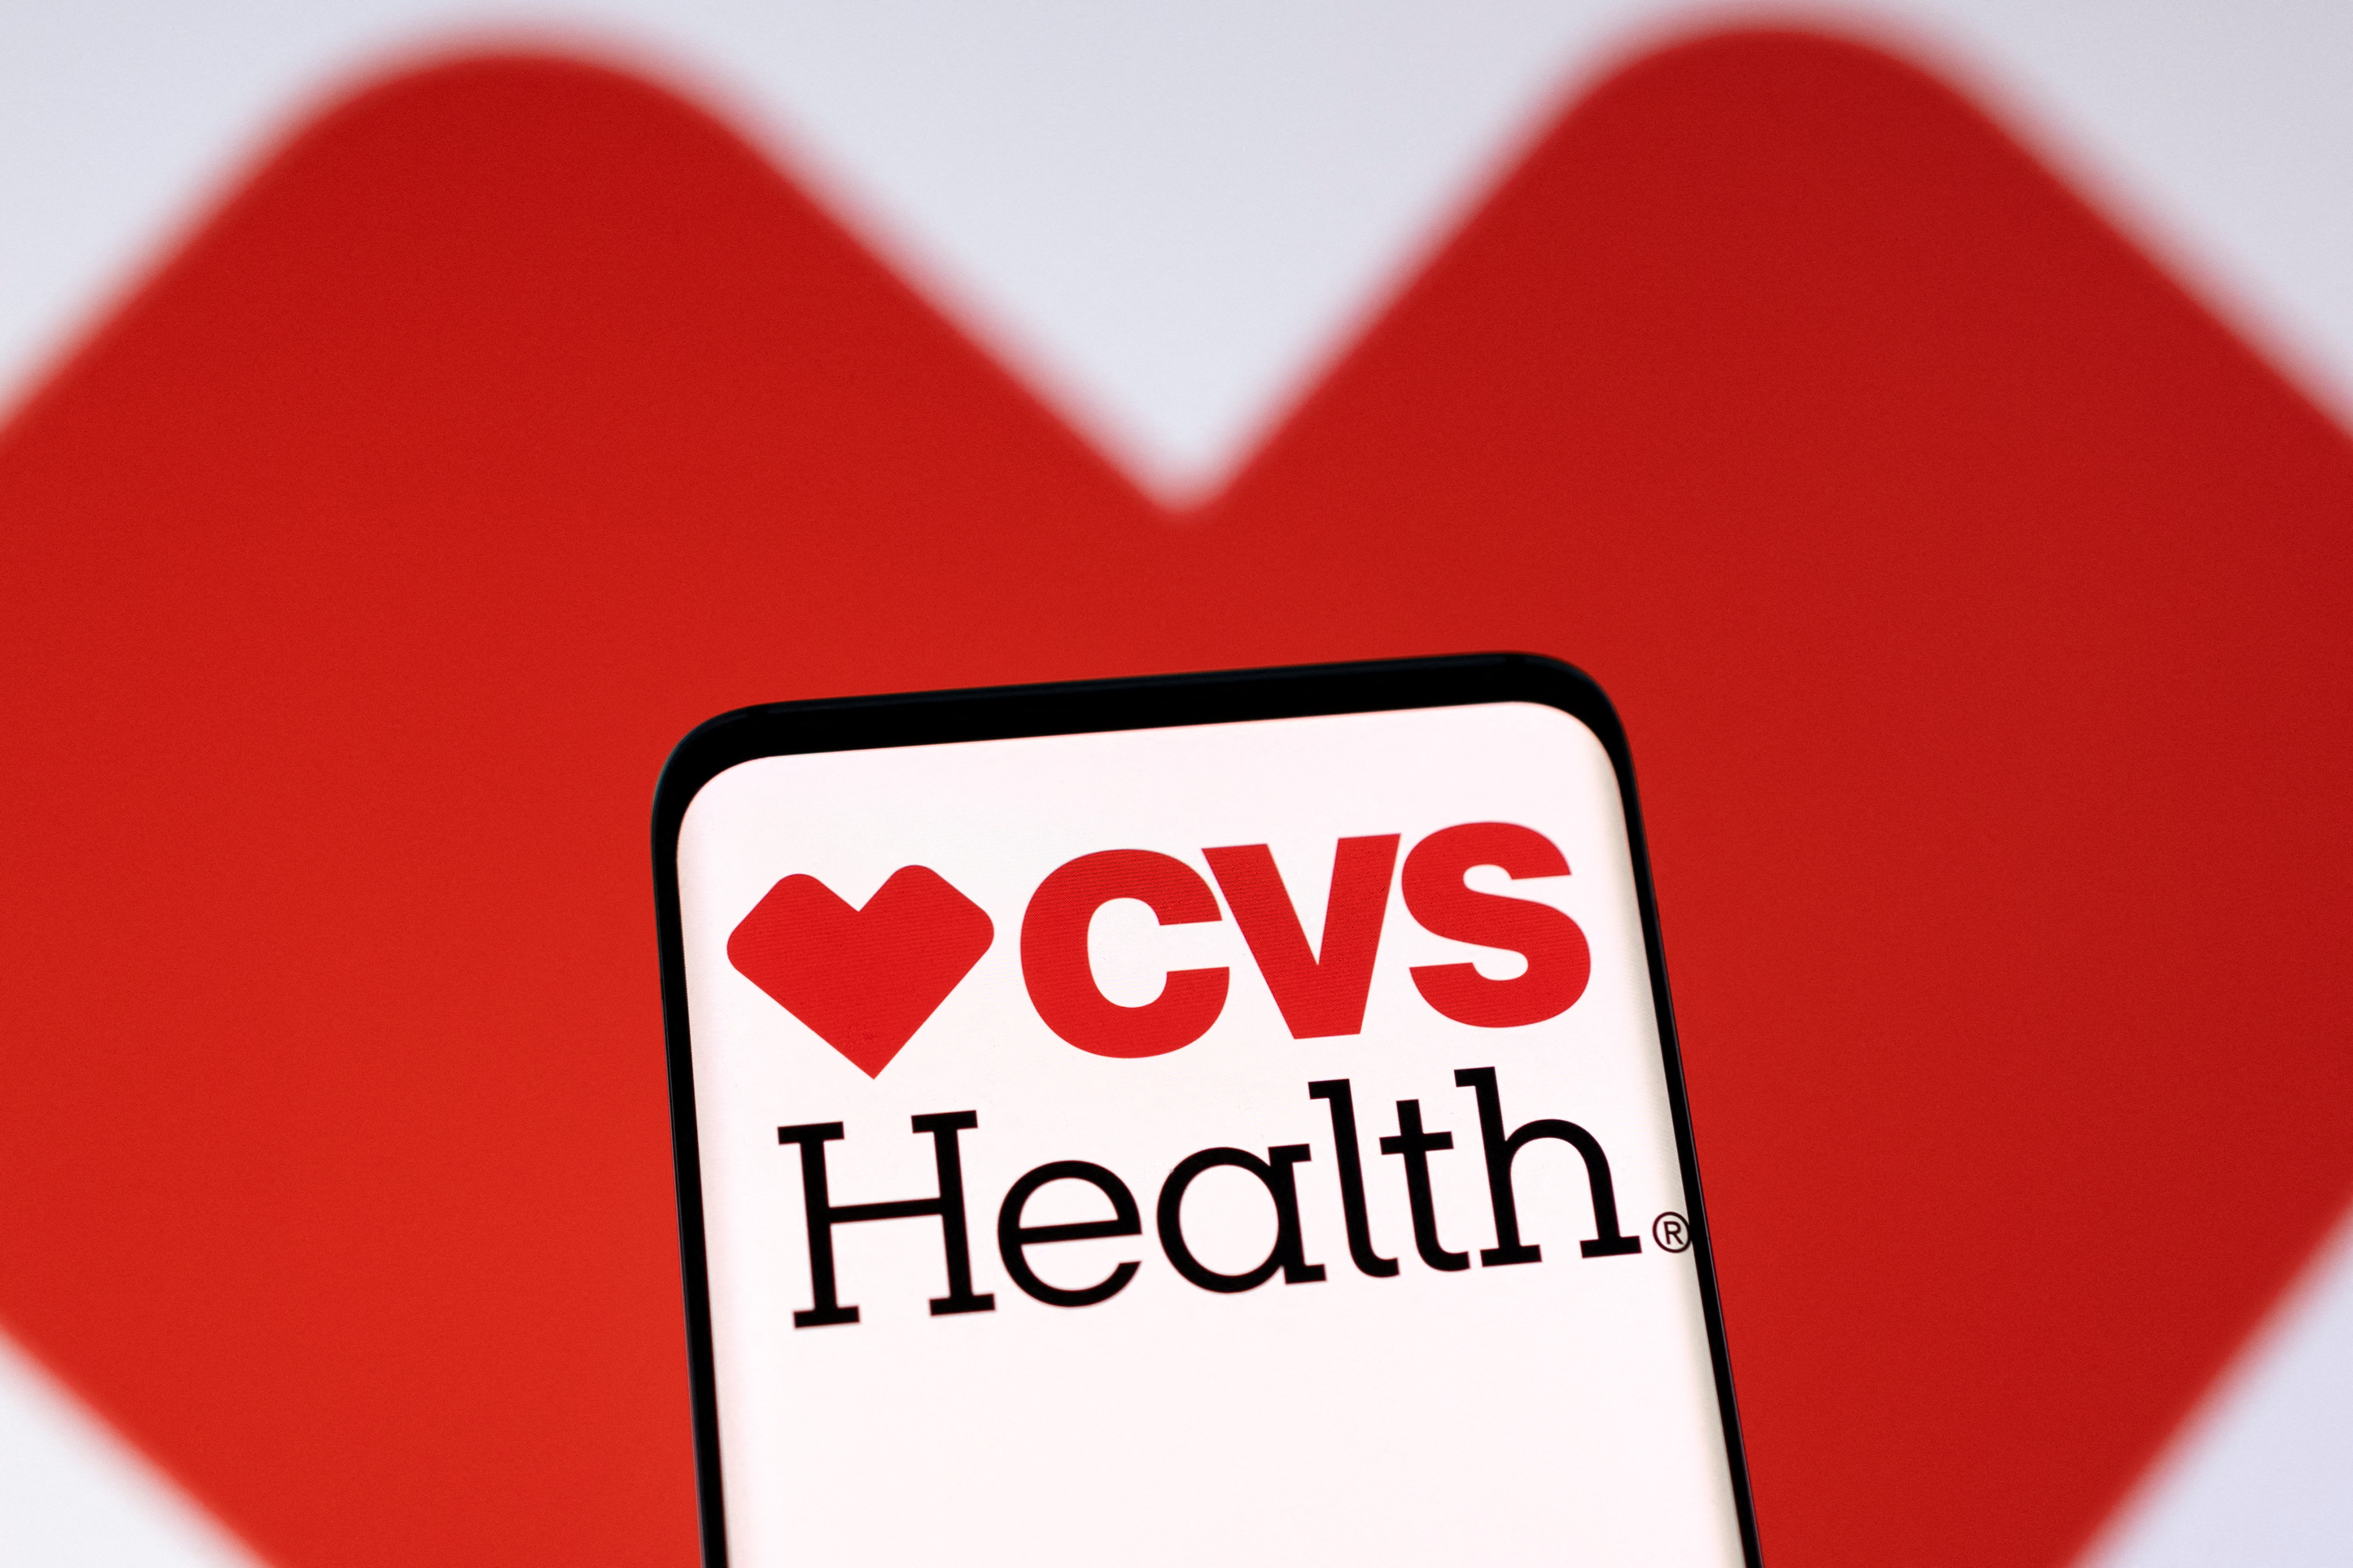 Illustration shows CVS Health logo